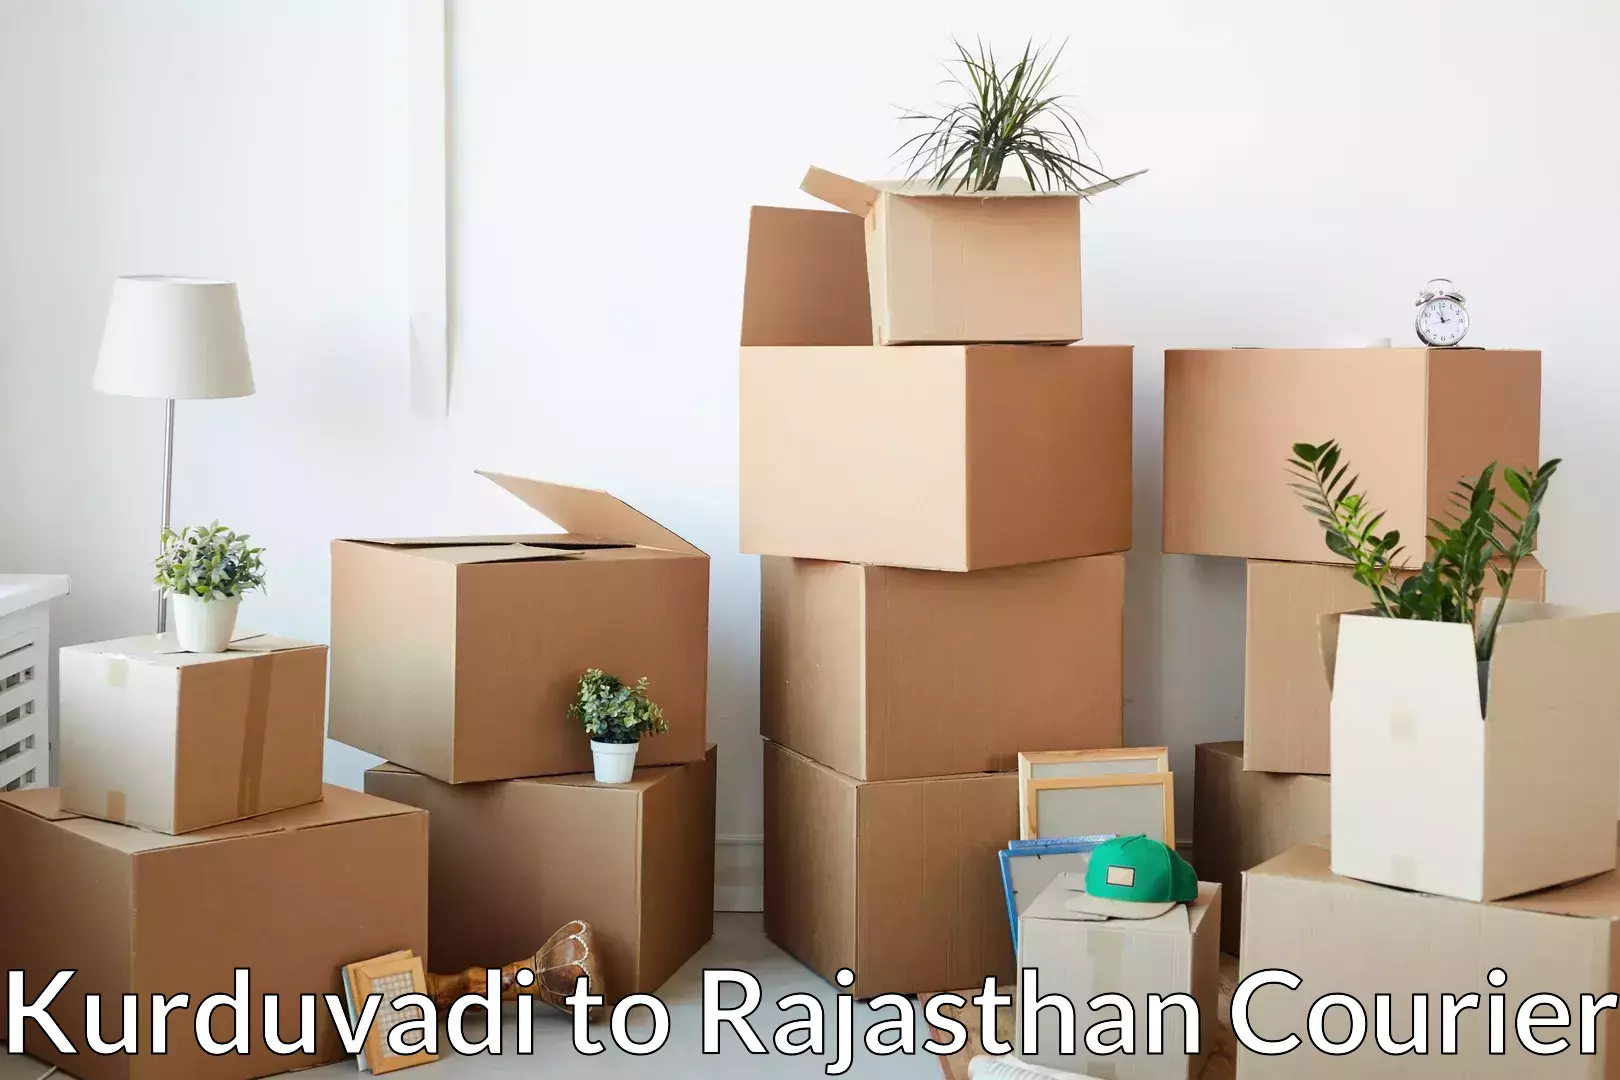 Home relocation experts Kurduvadi to Jaipur